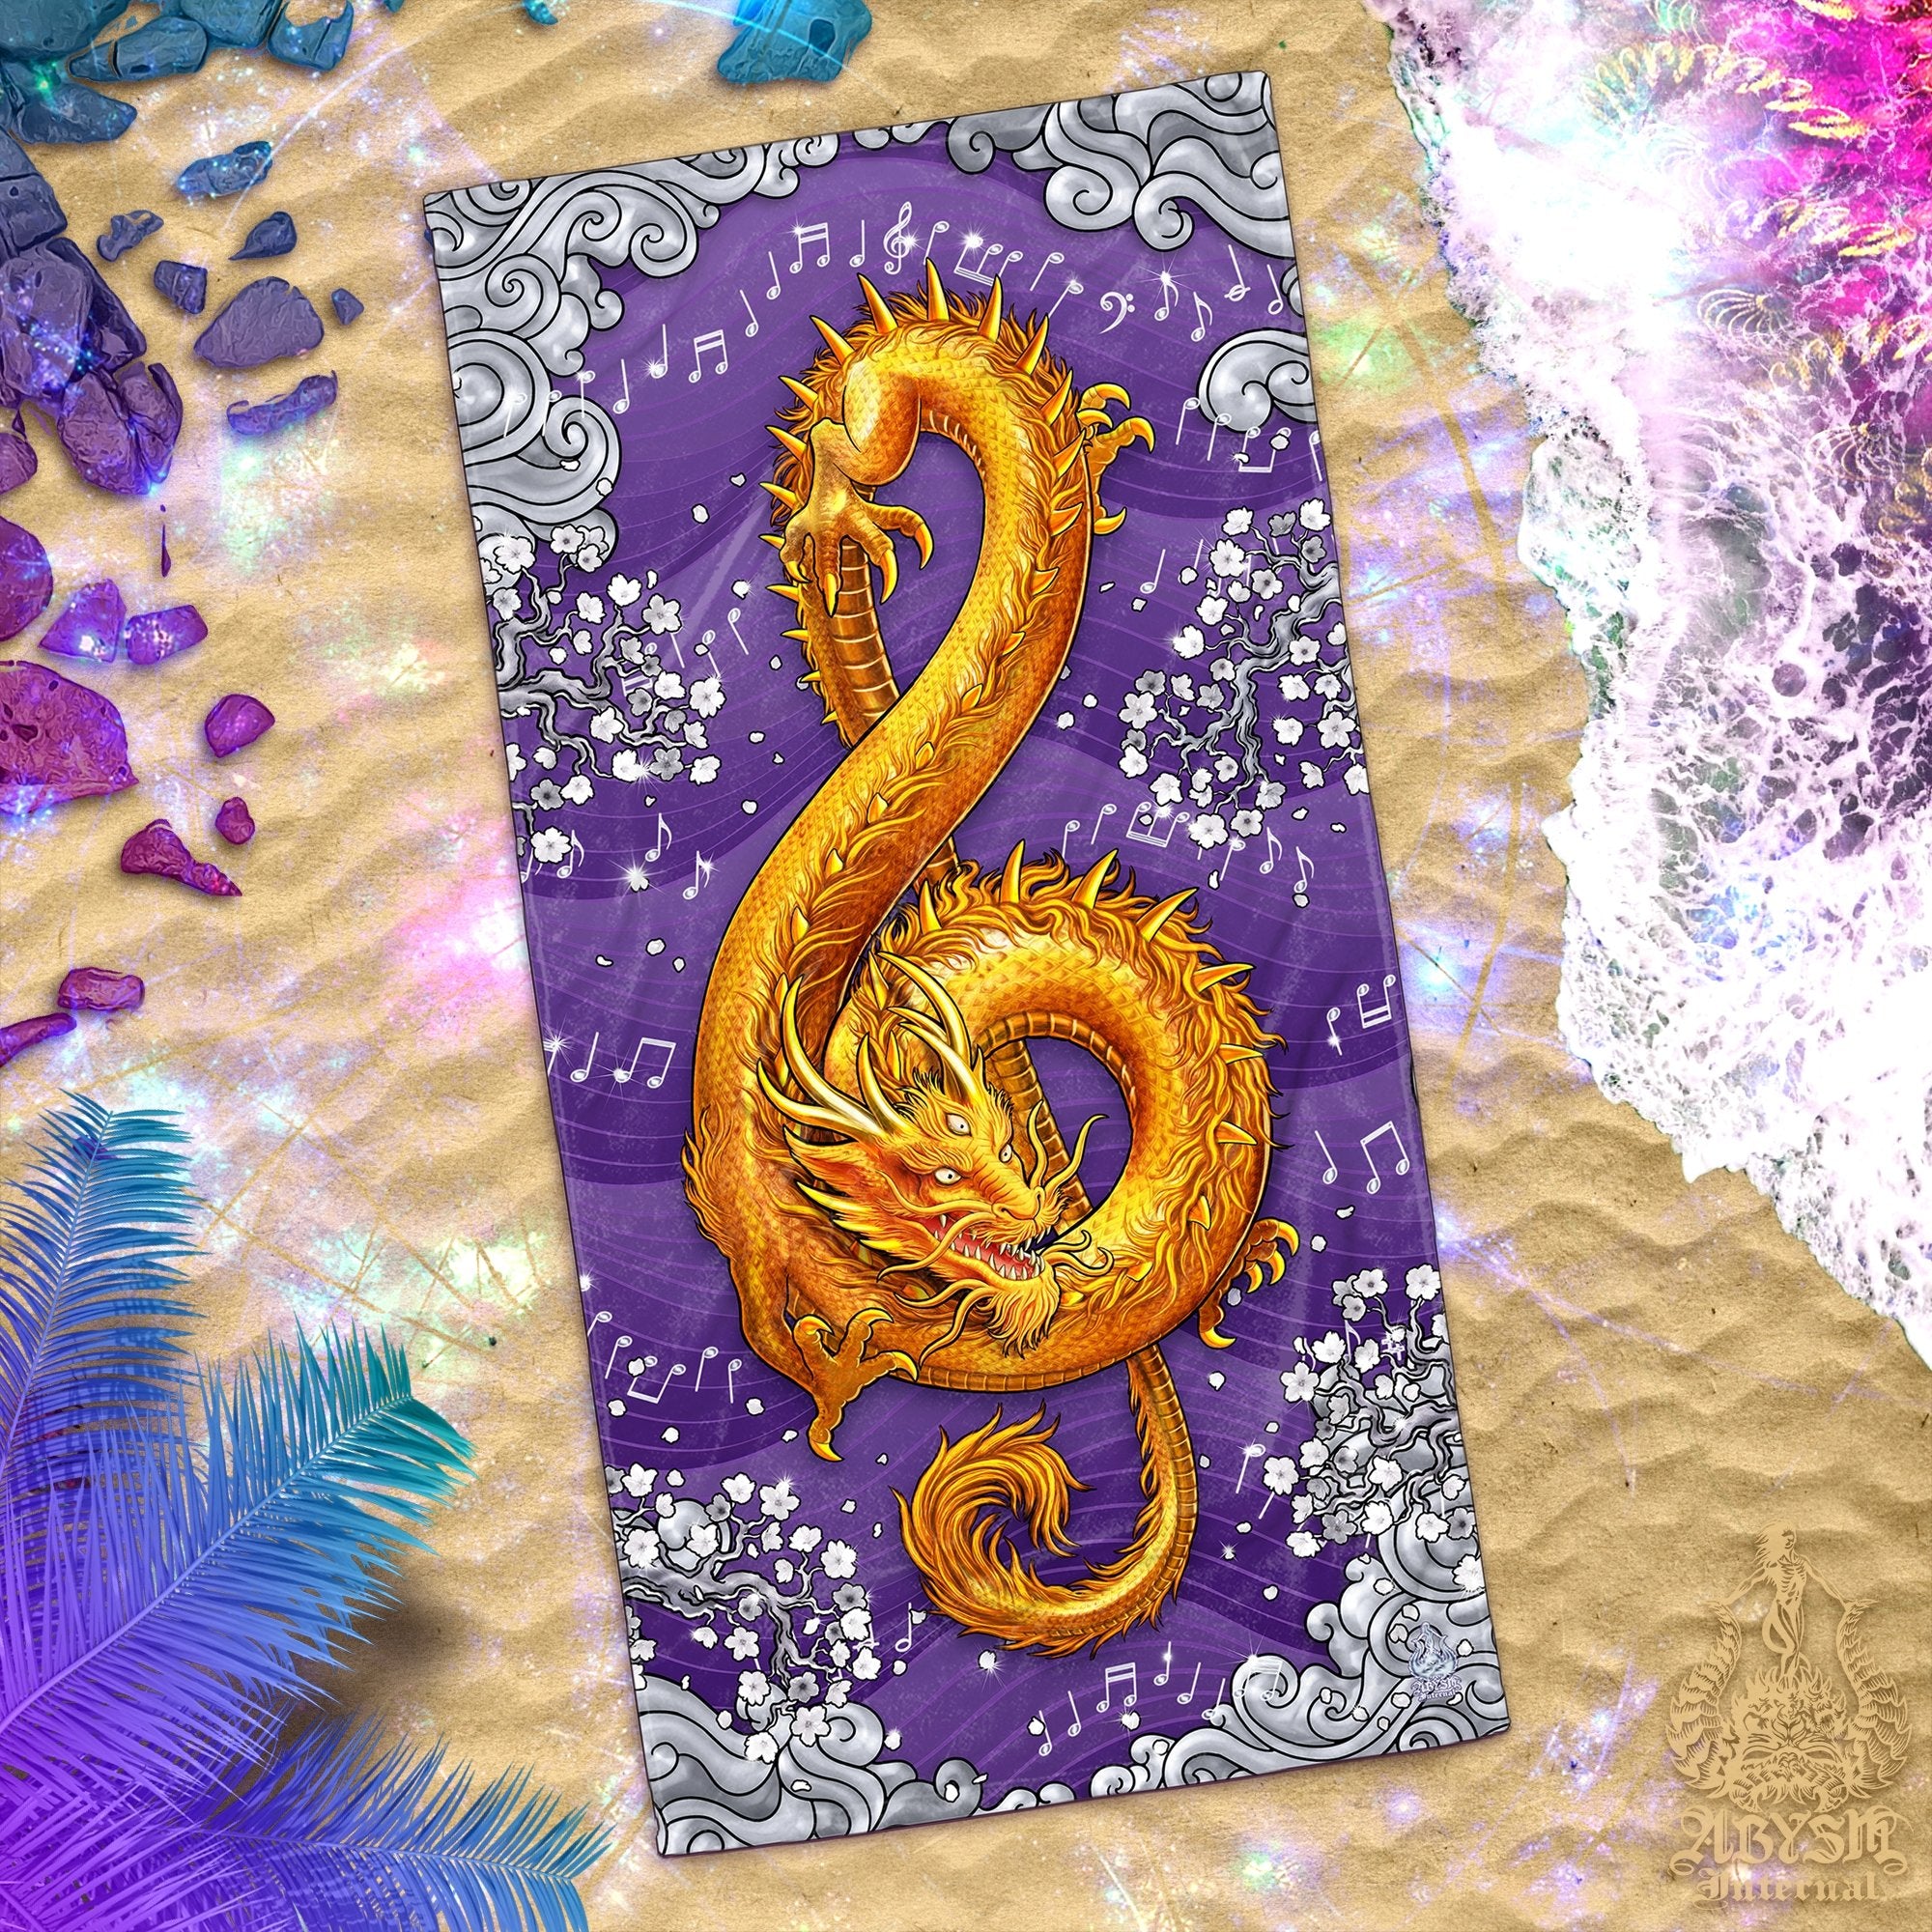 Music Beach Towel, Dragon Art, Treble Clef, Asian Dragon - Purple Gold - Abysm Internal